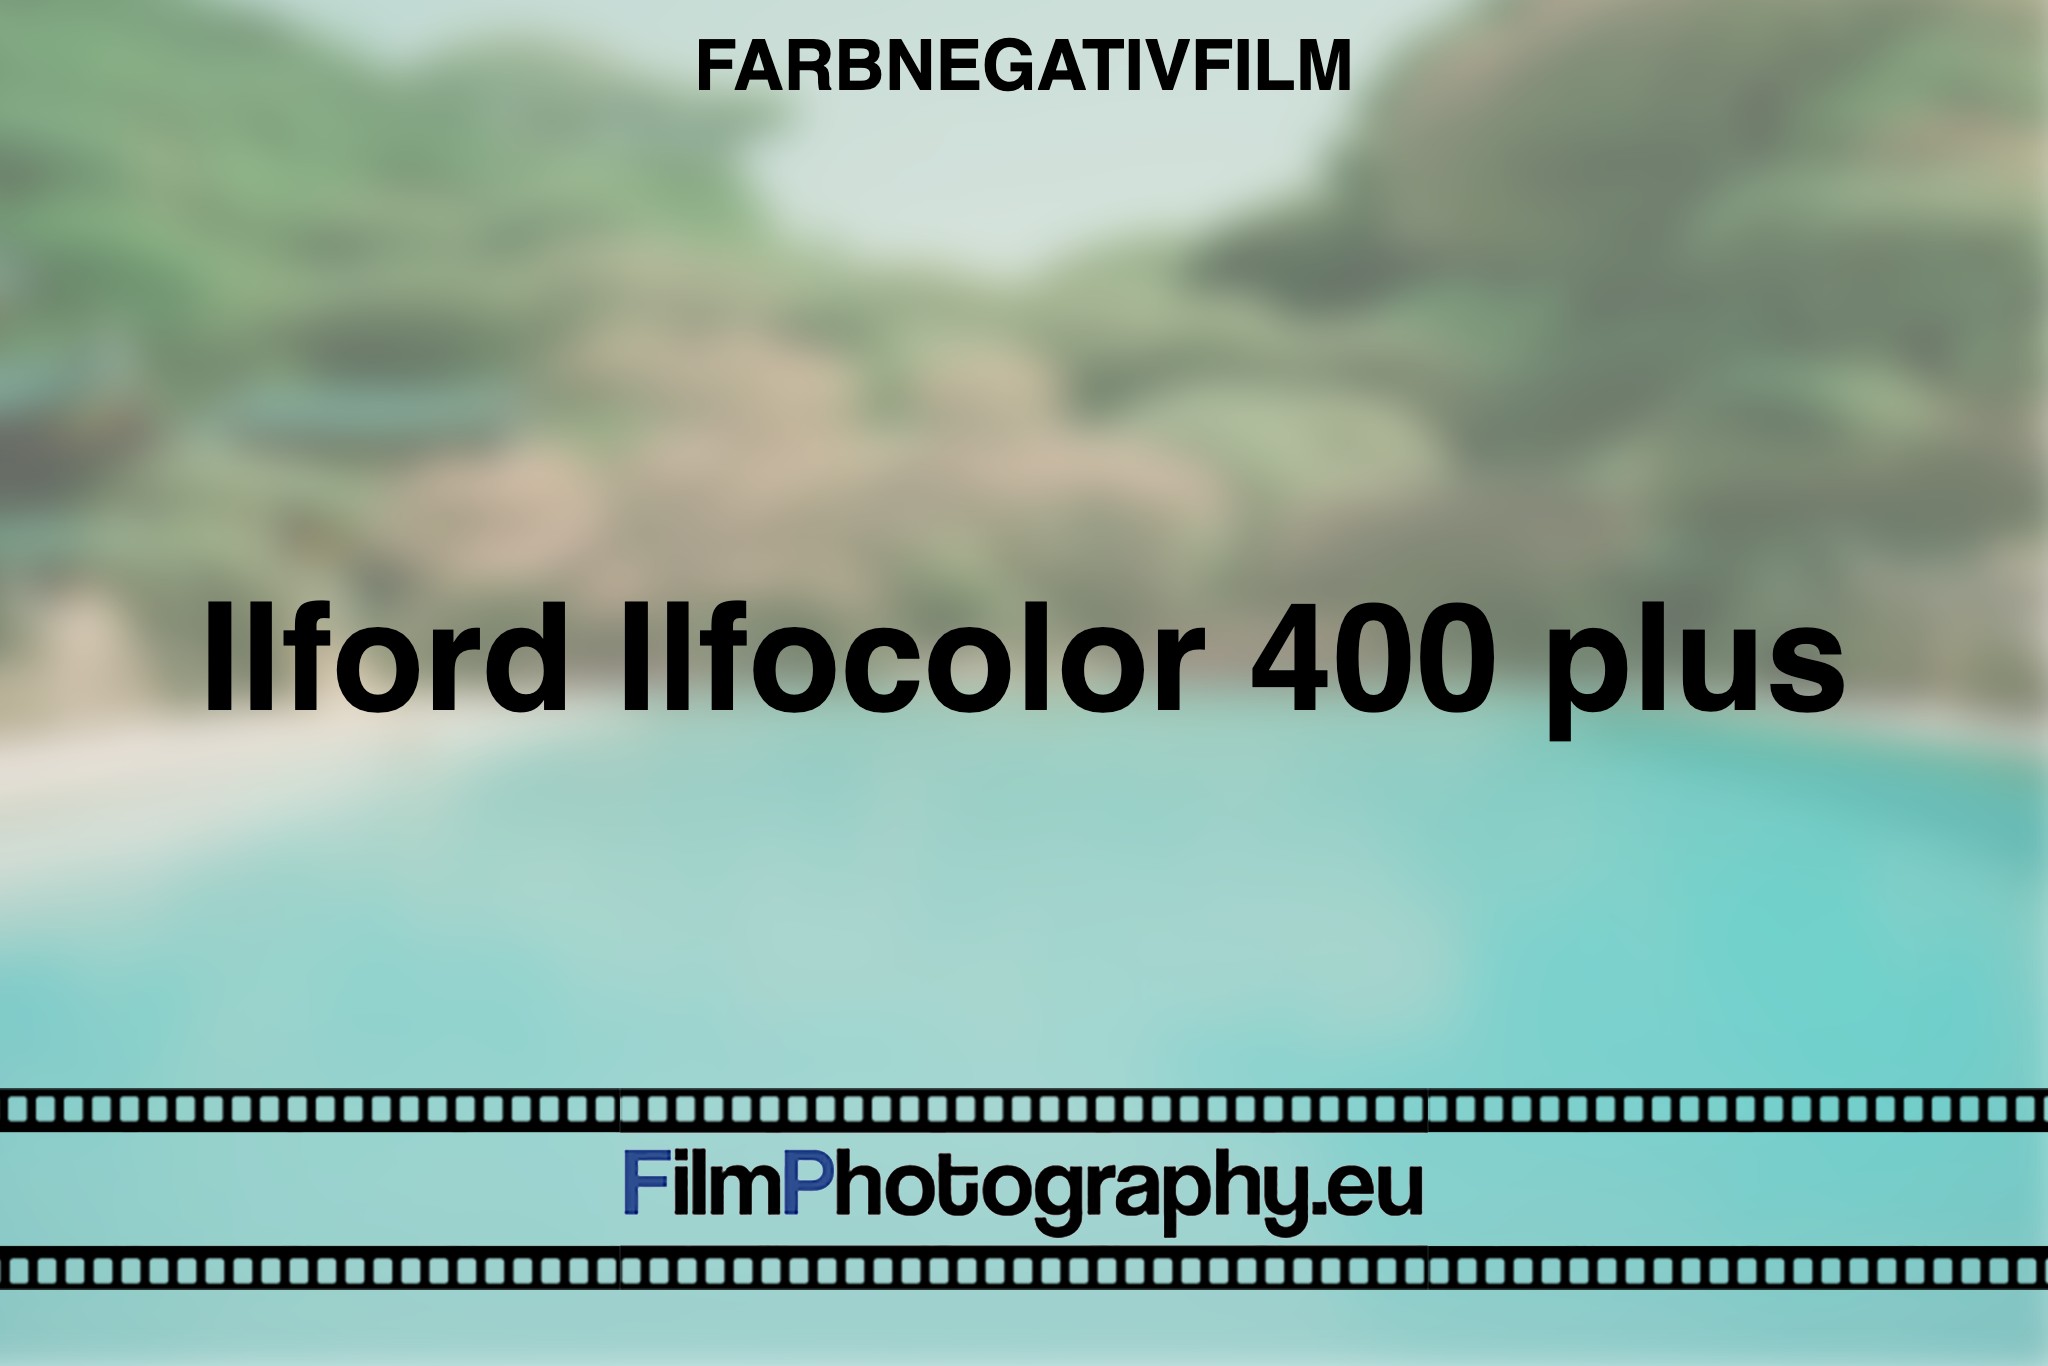 ilford-ilfocolor-400-plus-farbnegativfilm-bnv